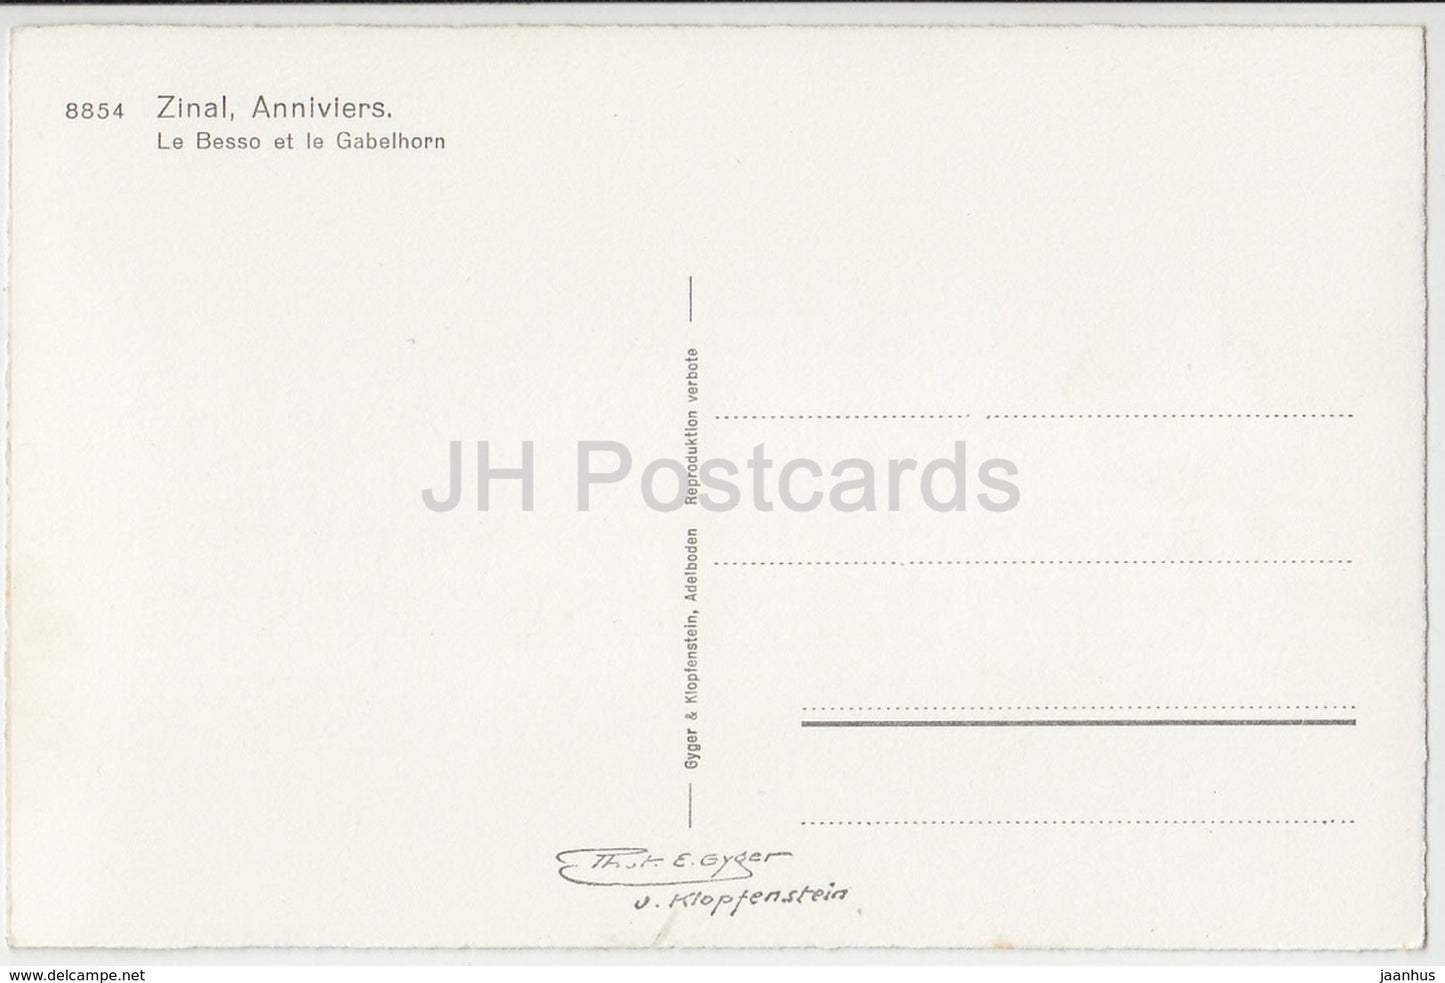 Zinal Anniviers - Le Besso et le Gabelhorn - 8854 - Switzerland - old postcard - unused